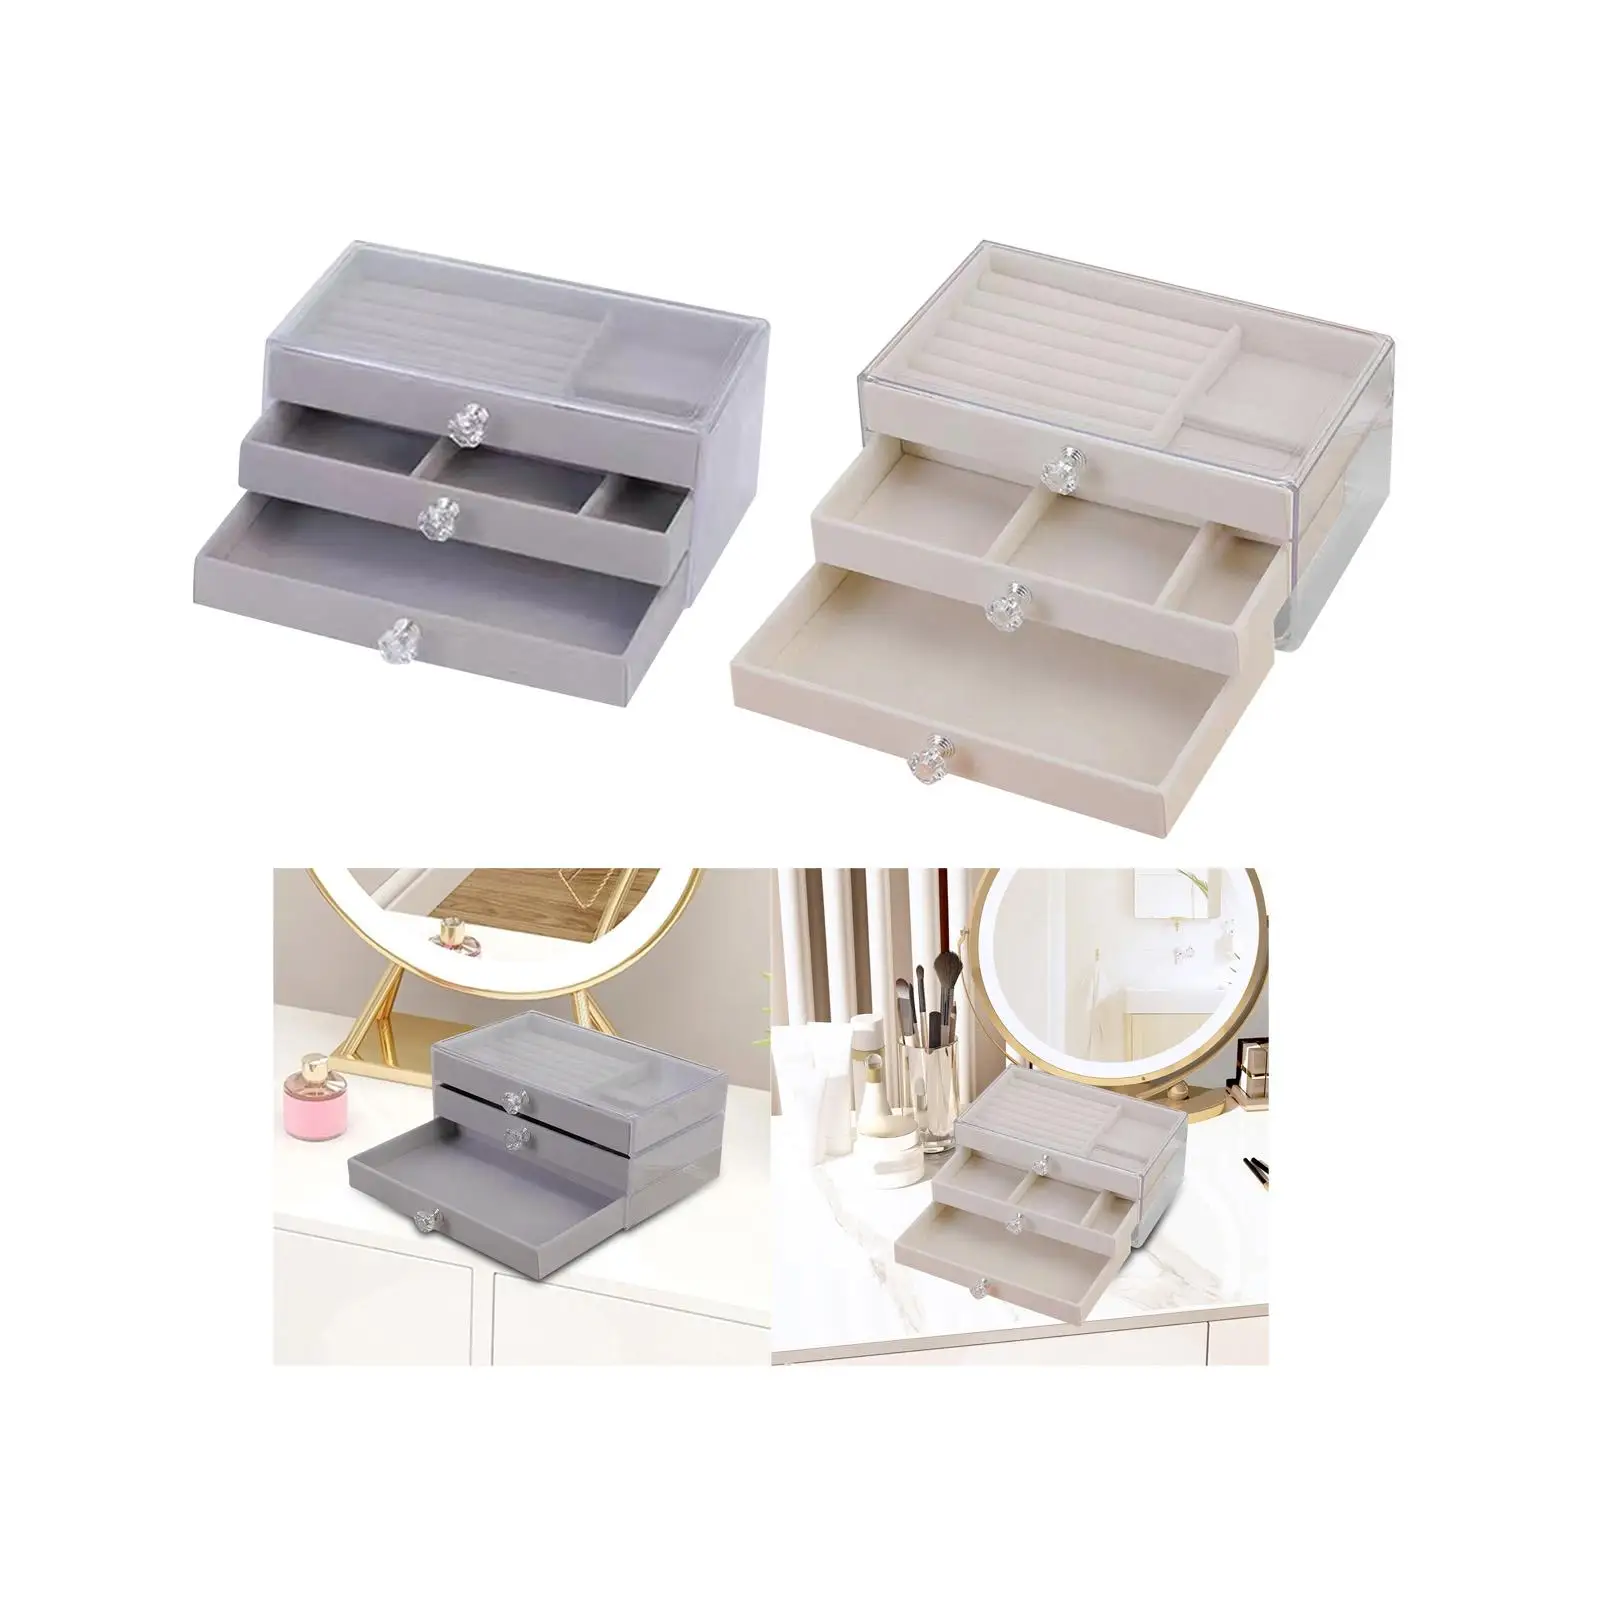 Jewelry Storage Box with 3 Drawers Jewelry Organizer Fine Workmanship for Women Girls Gift 23.5x13.5x10.5cm Transparent Cover